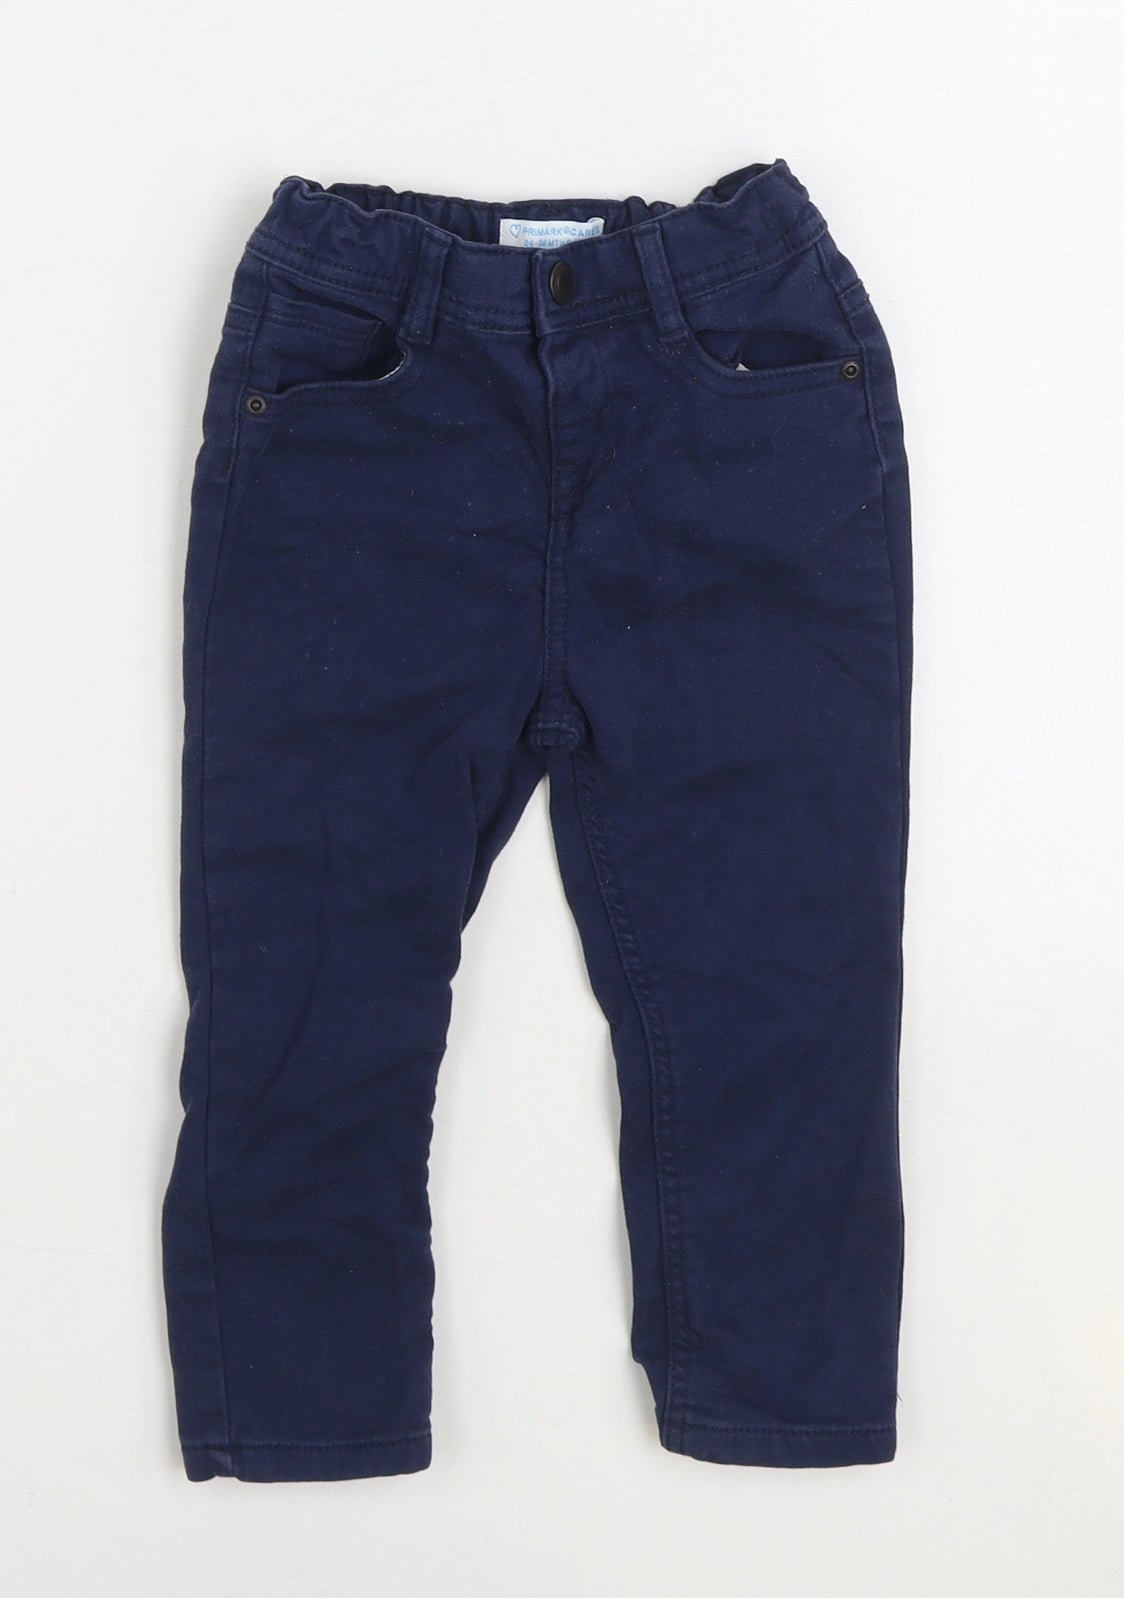 Primark Boys Blue Cotton Straight Jeans Size 2-3 Years Regular Button